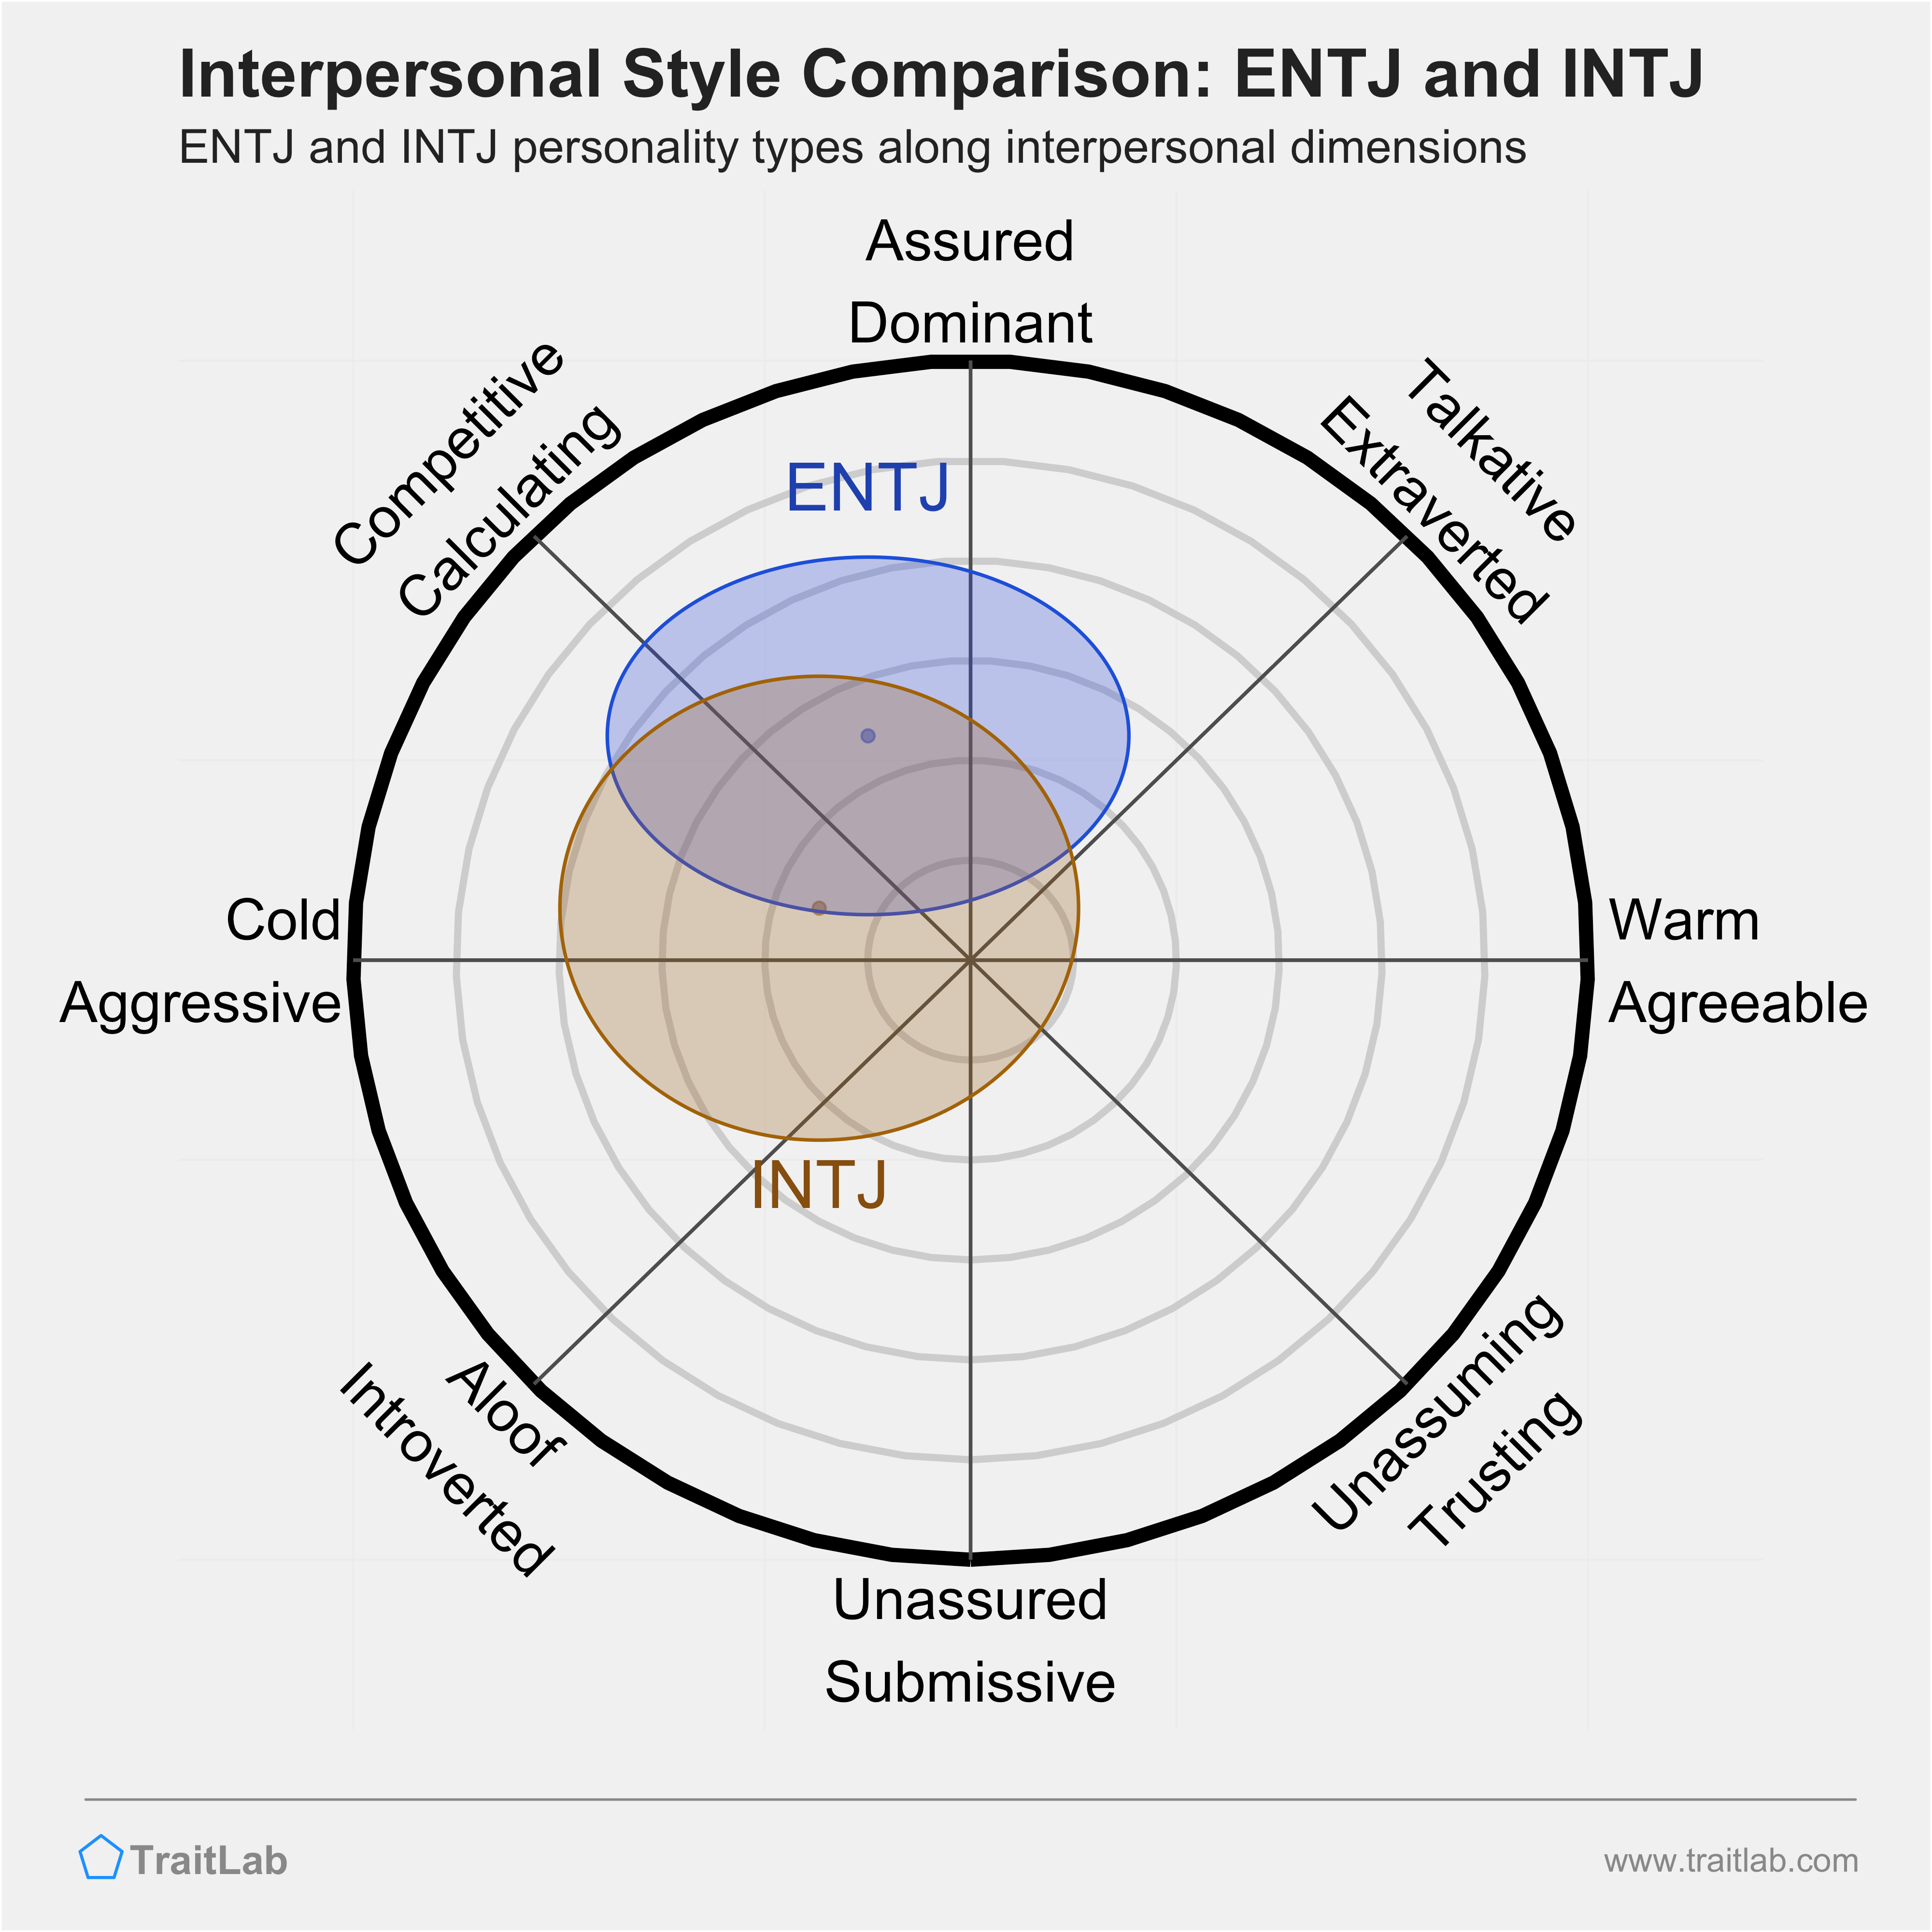 ENTJ and INTJ comparison across interpersonal dimensions